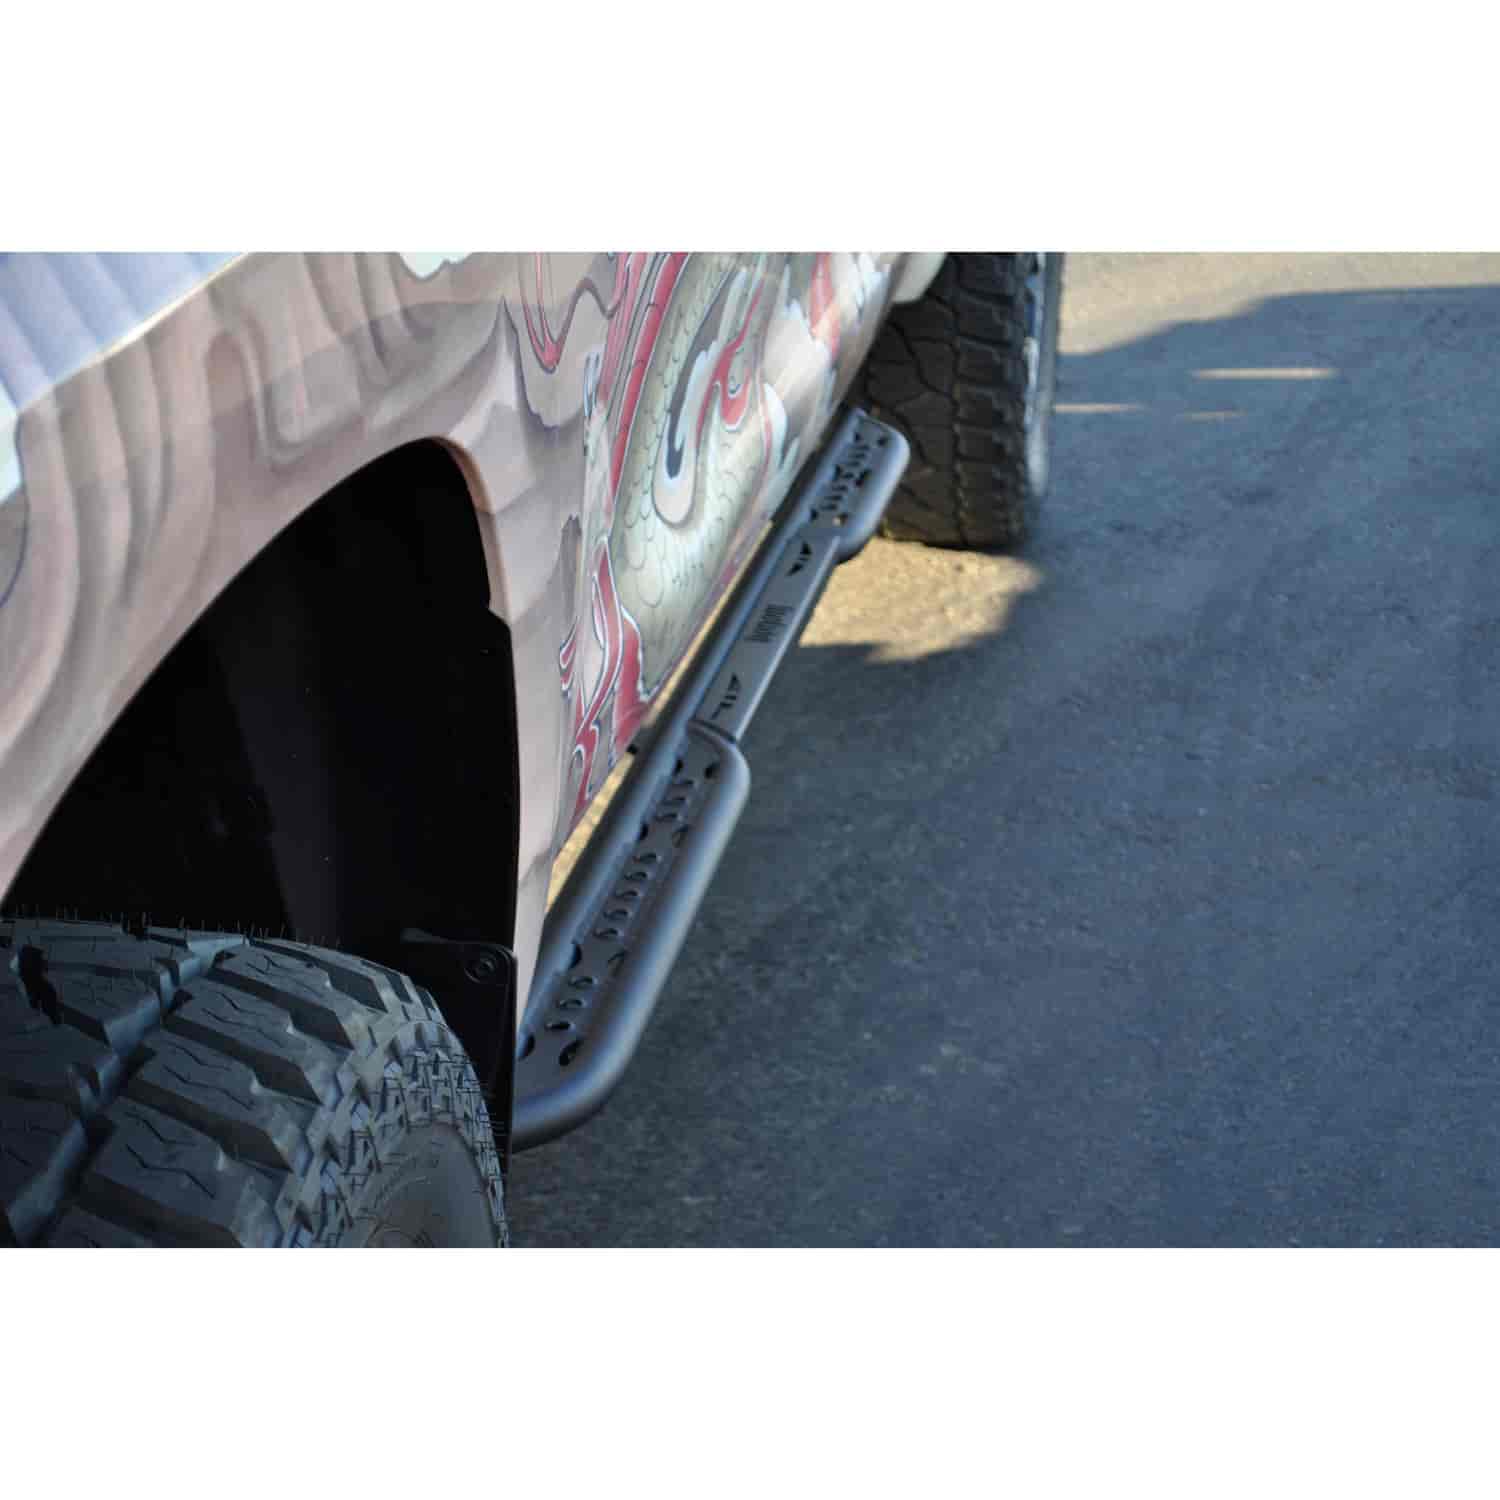 07-Up Toyota Tundra Venom side step for Crew cab 4 door in Hammer Black